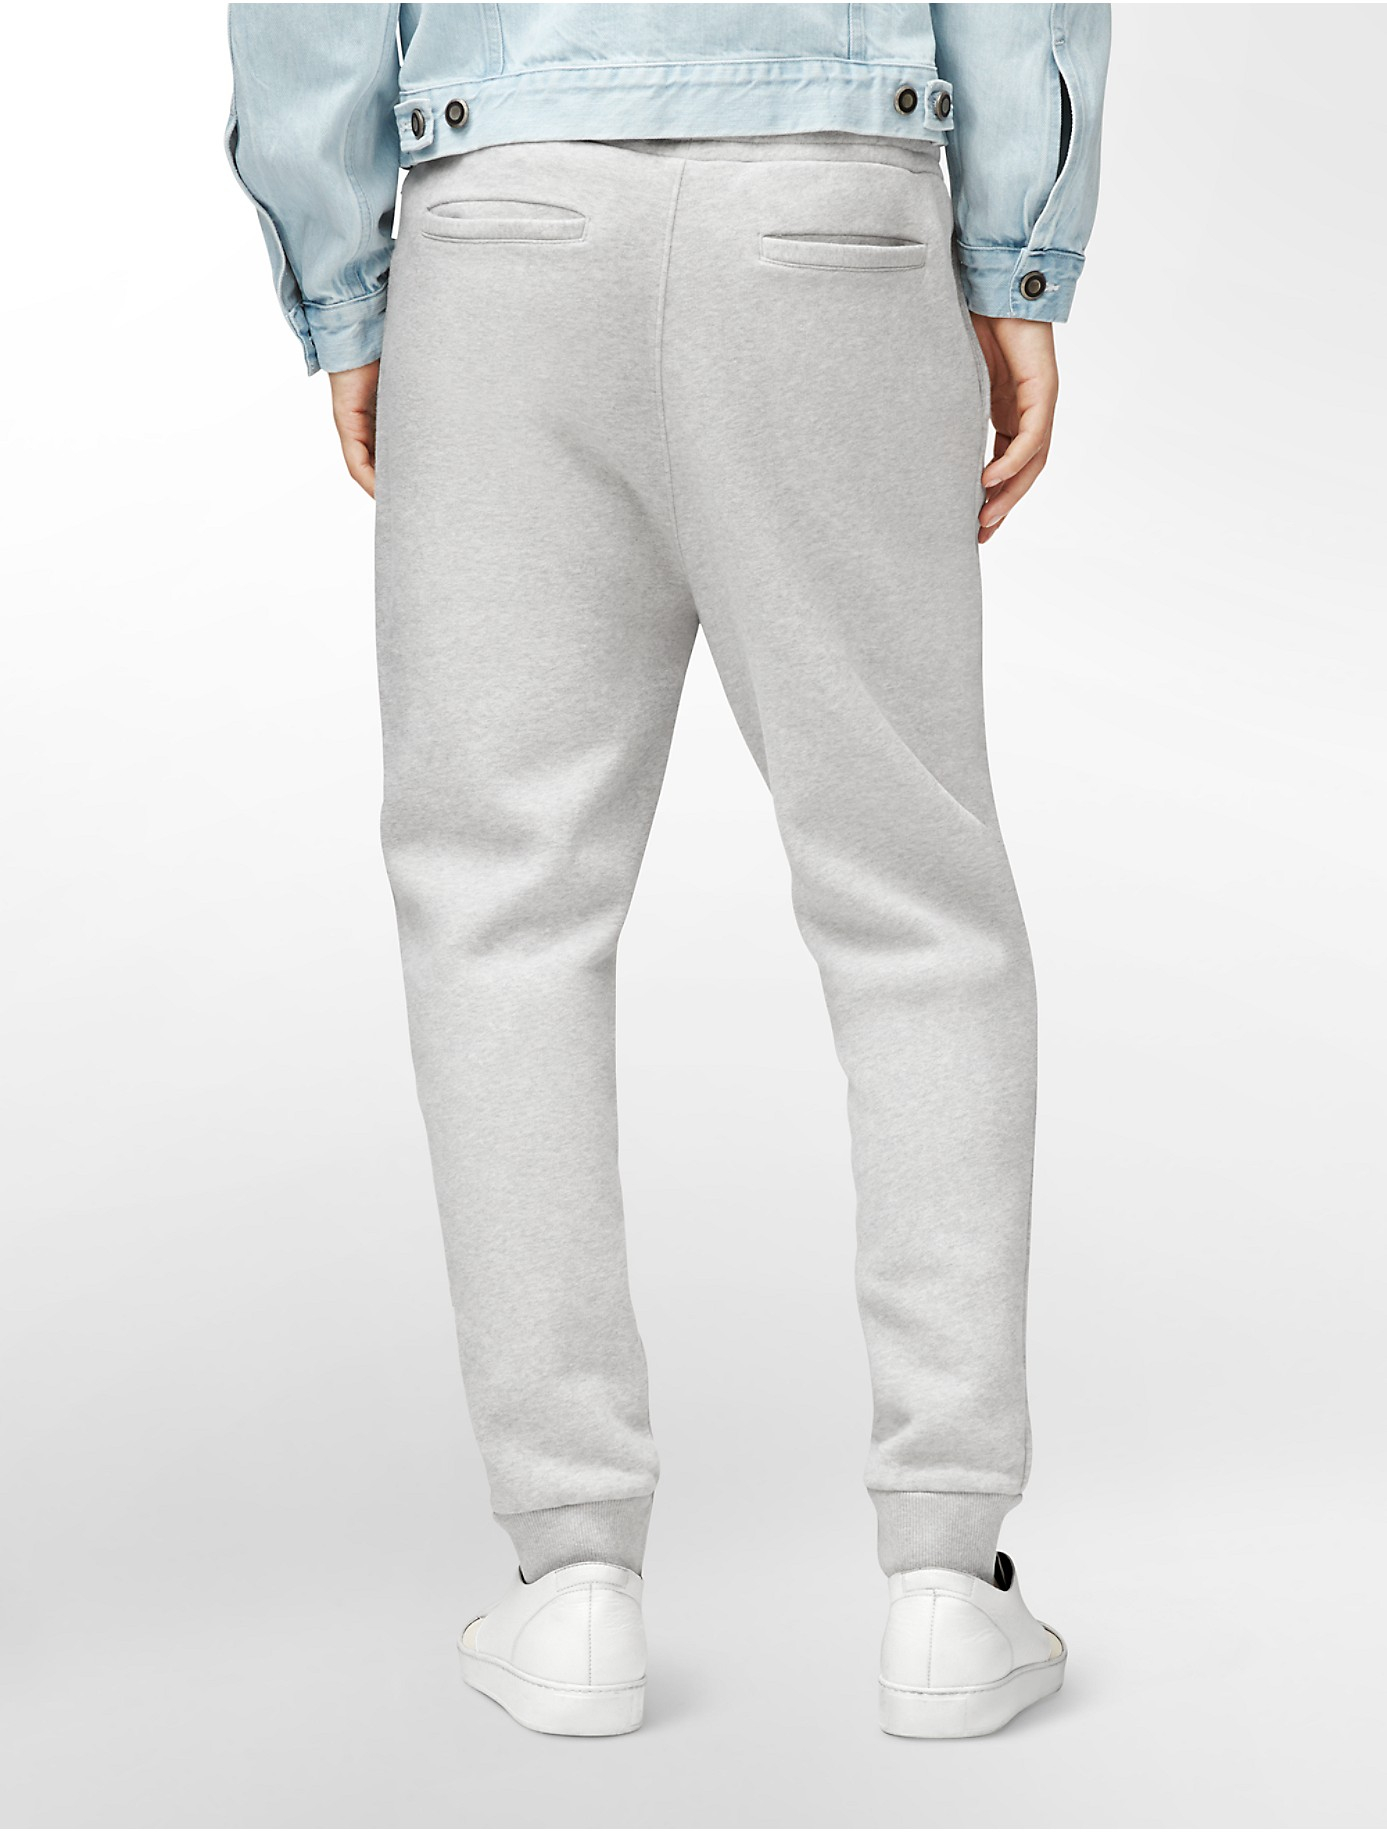 Calvin Klein Jeans Logo Jogger Sweatpants in Gray for Men - Lyst